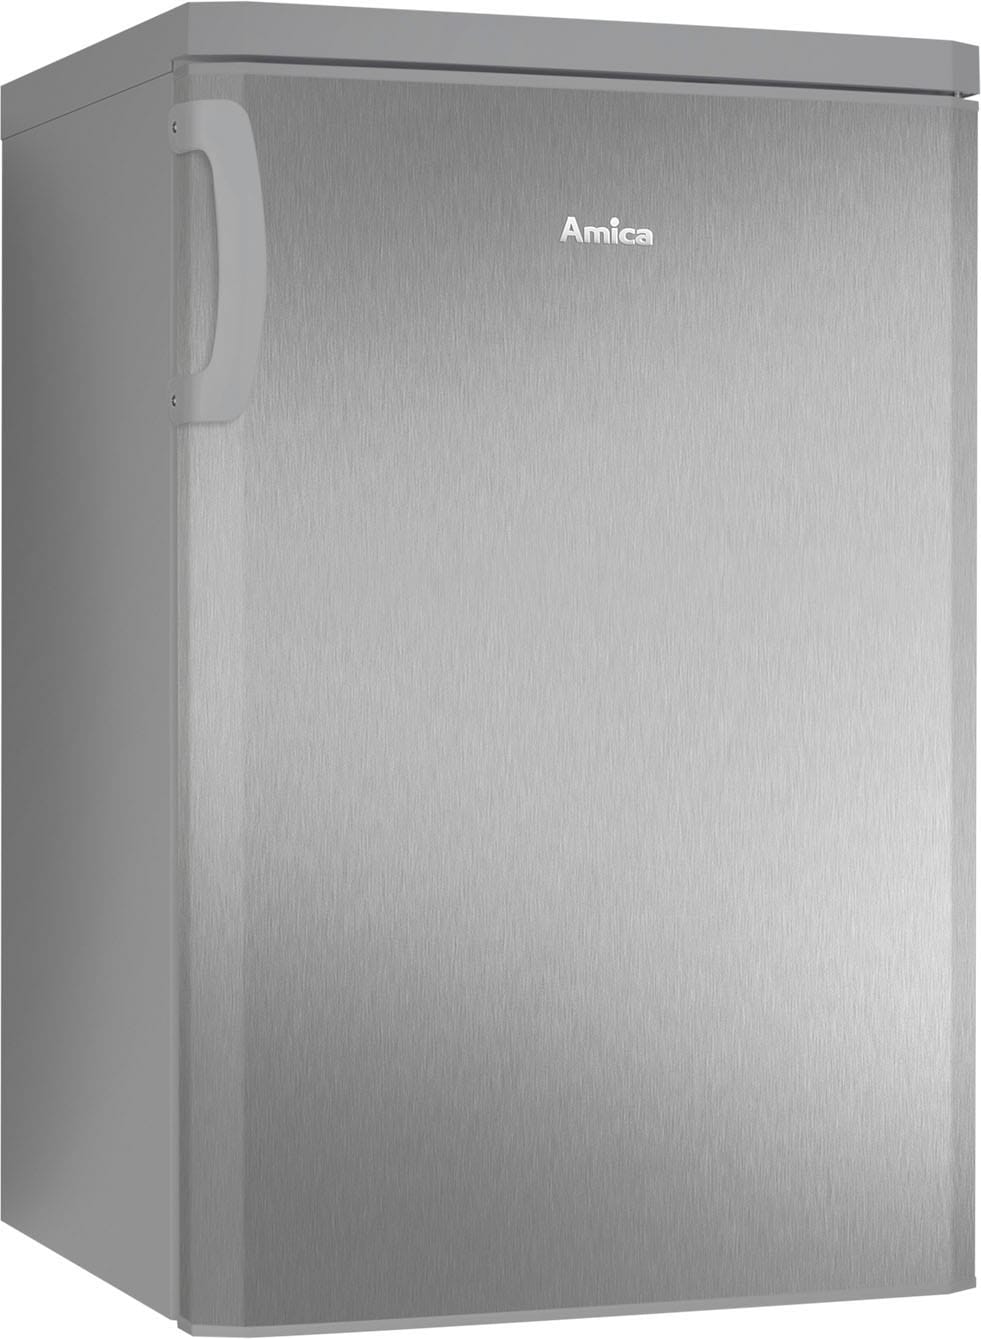 Amica Vollraumkühlschrank »VKS 351110-2 E«, VKS 351110-2 E, 84,5 cm hoch, 55 cm breit